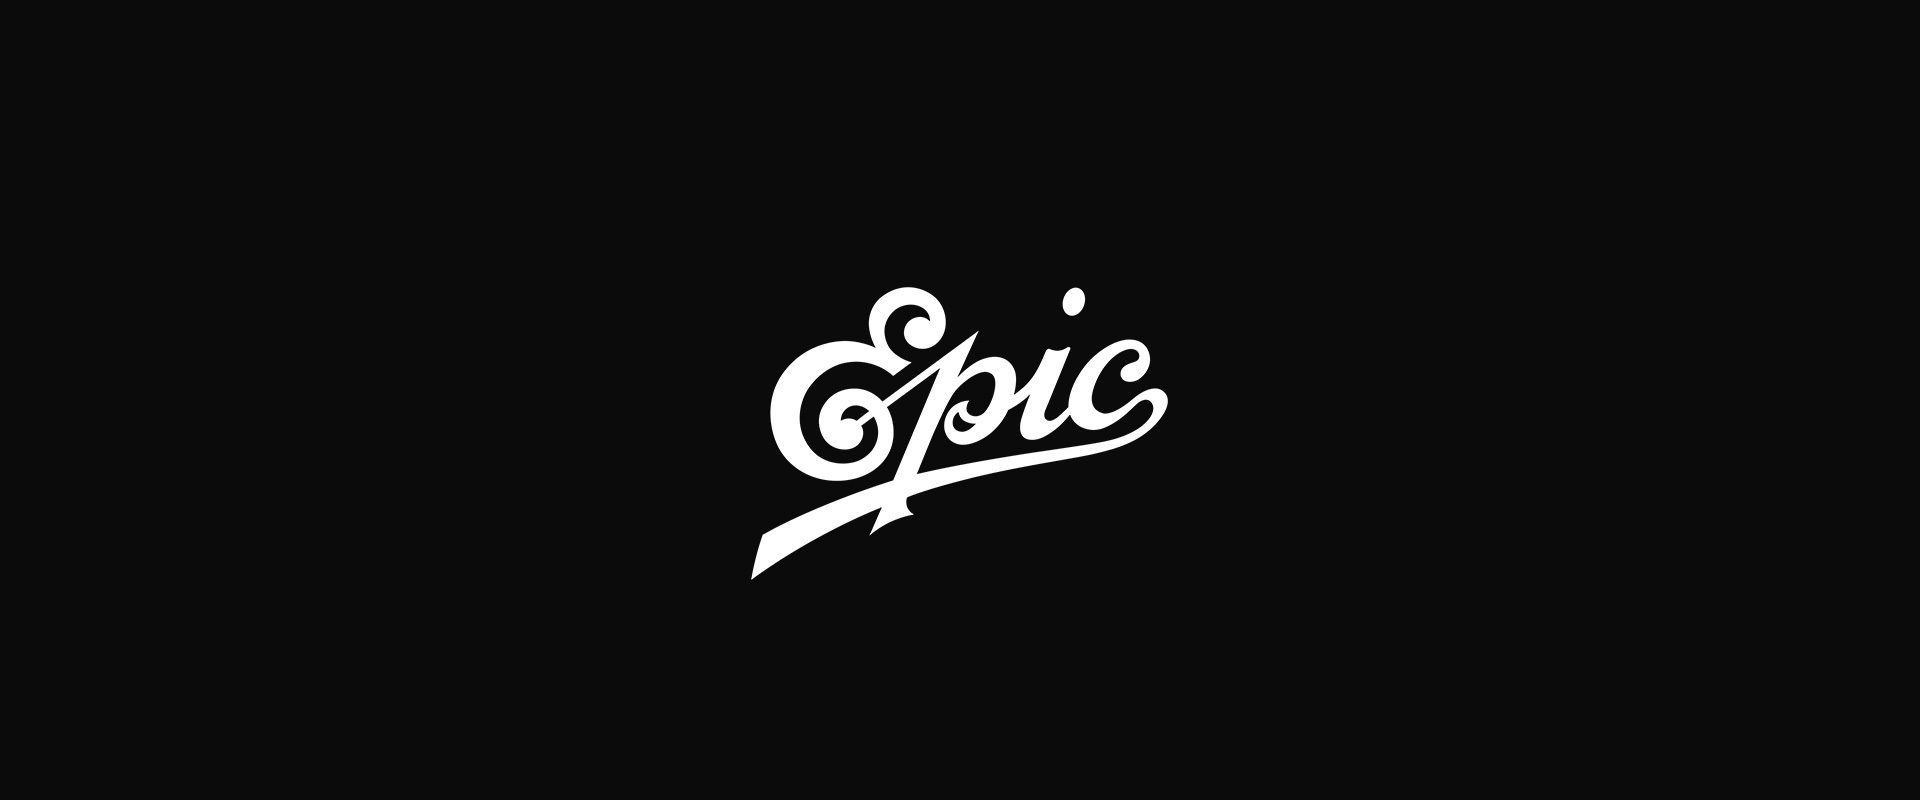 epic-header-1920x800.jpg